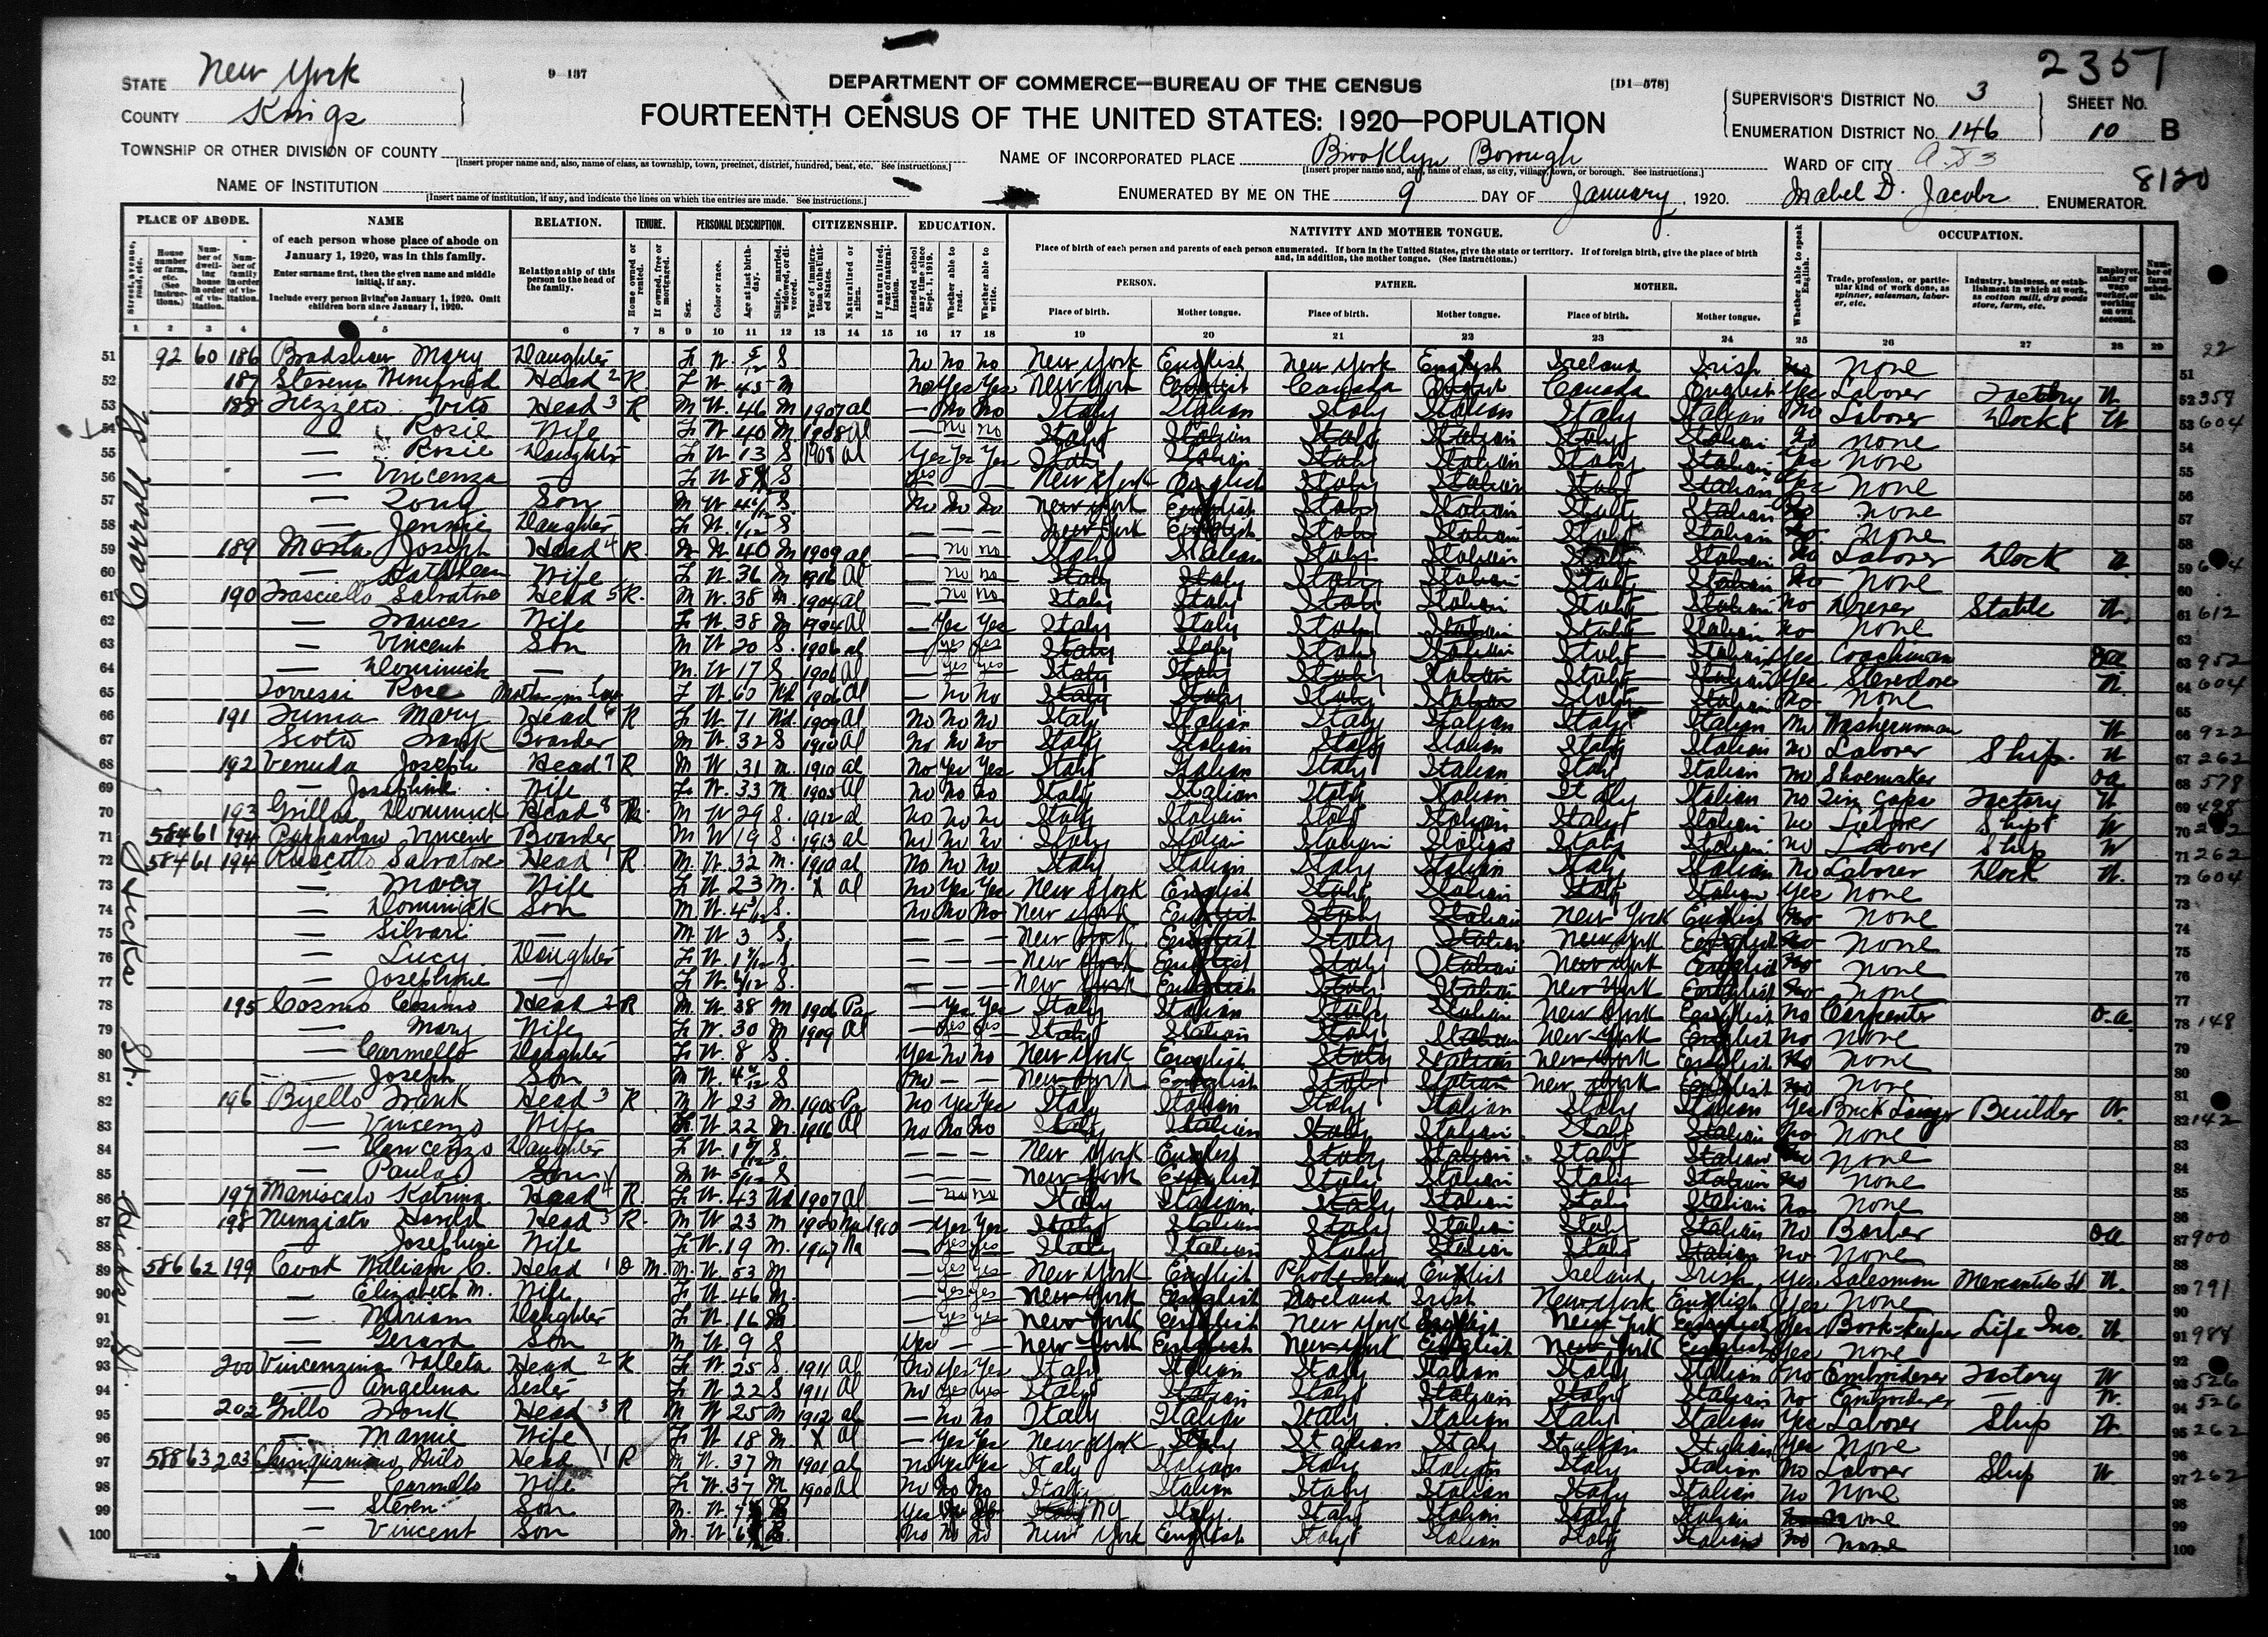 Salvatore Ruscitto in the 1920 United States Federal Census (Click to zoom).